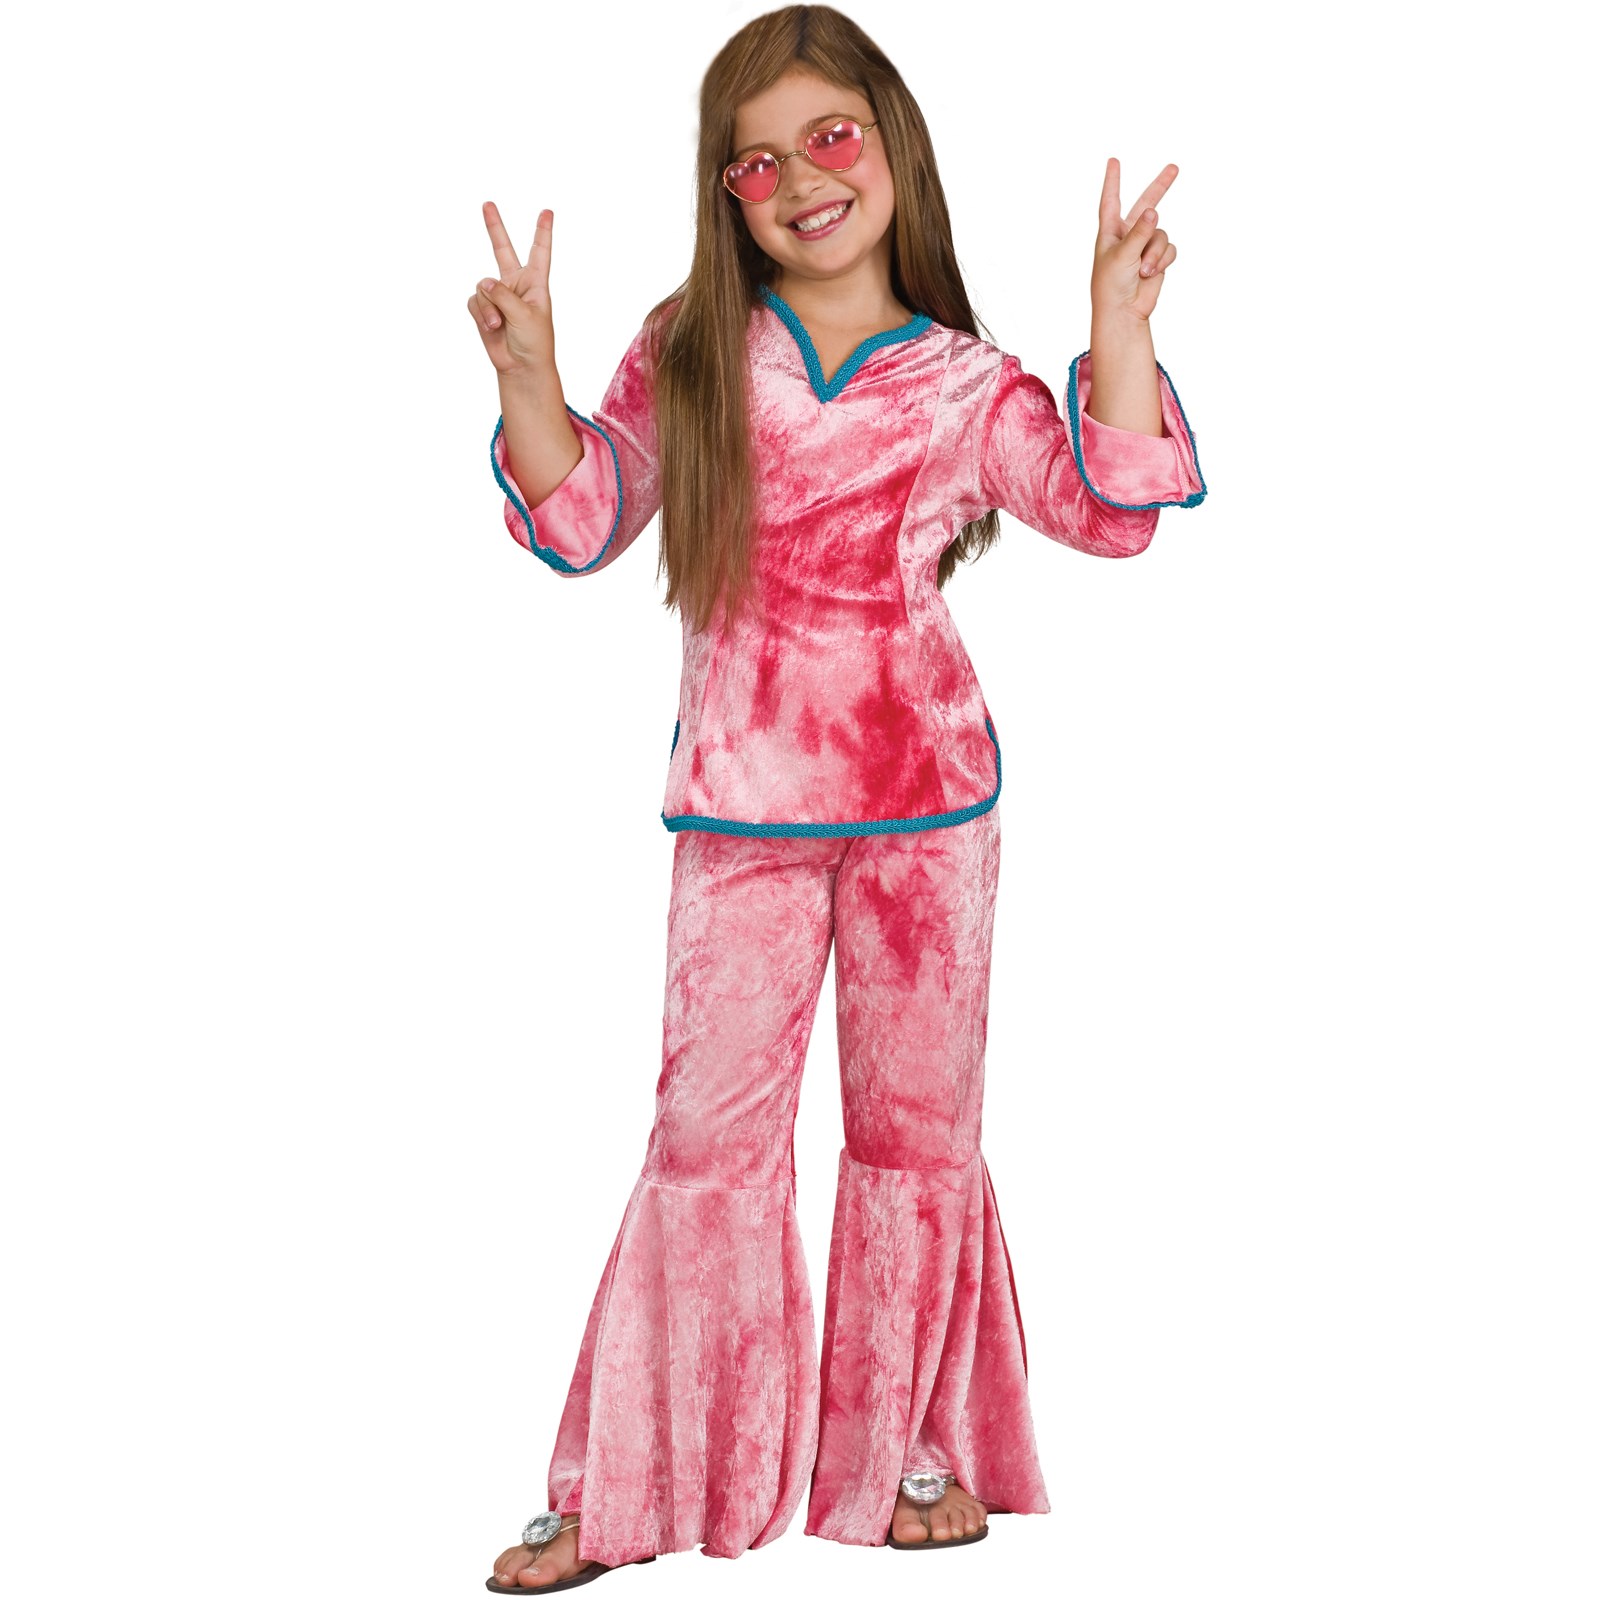 Woodstock Diva (Pink) Child Costume